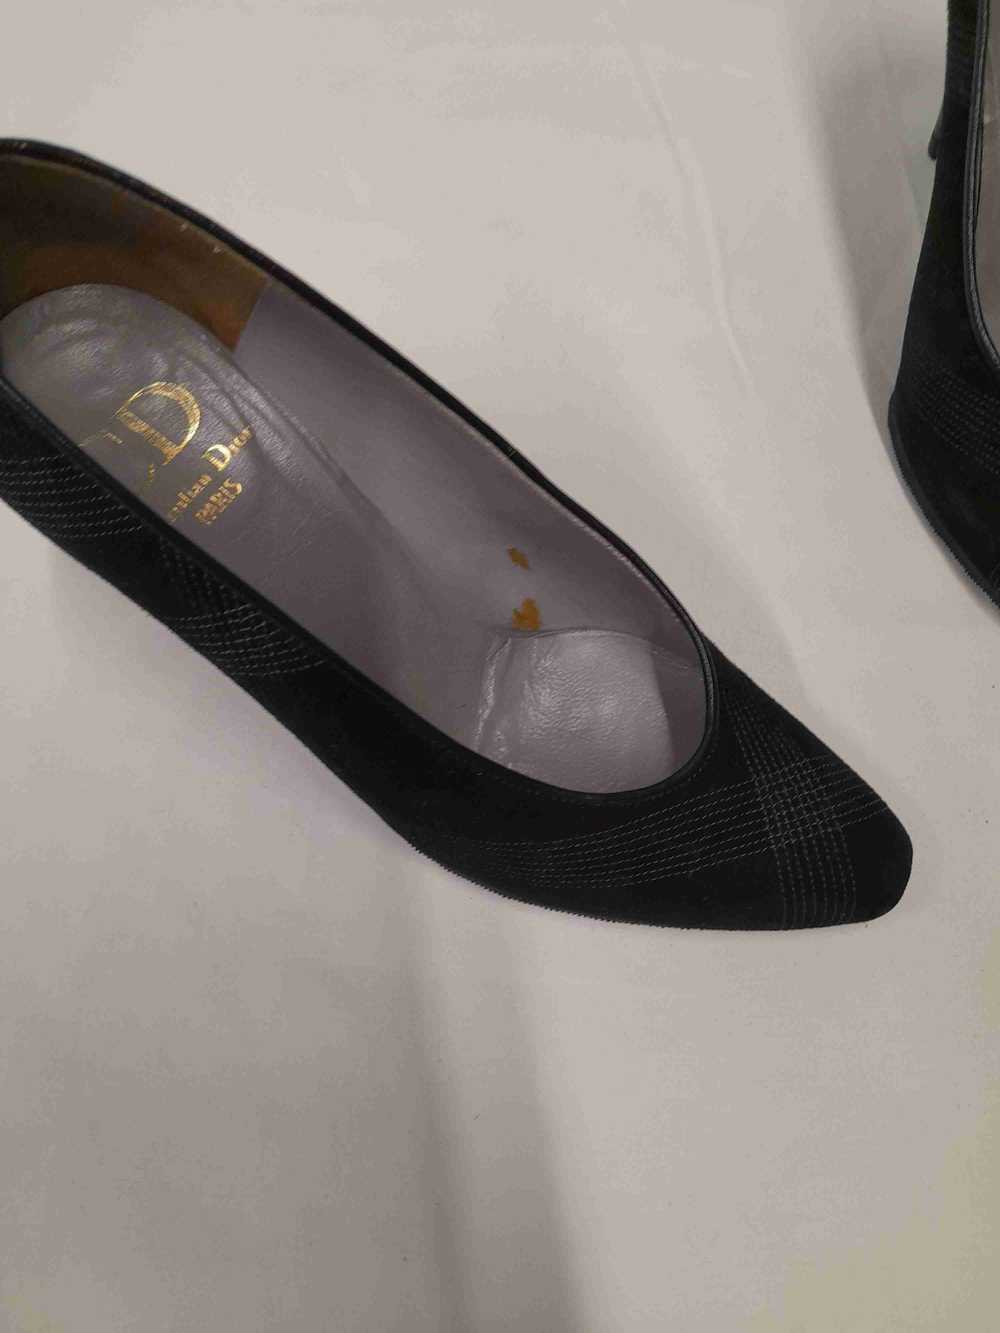 Christian Dior pumps - Christian Dior shoes - image 8